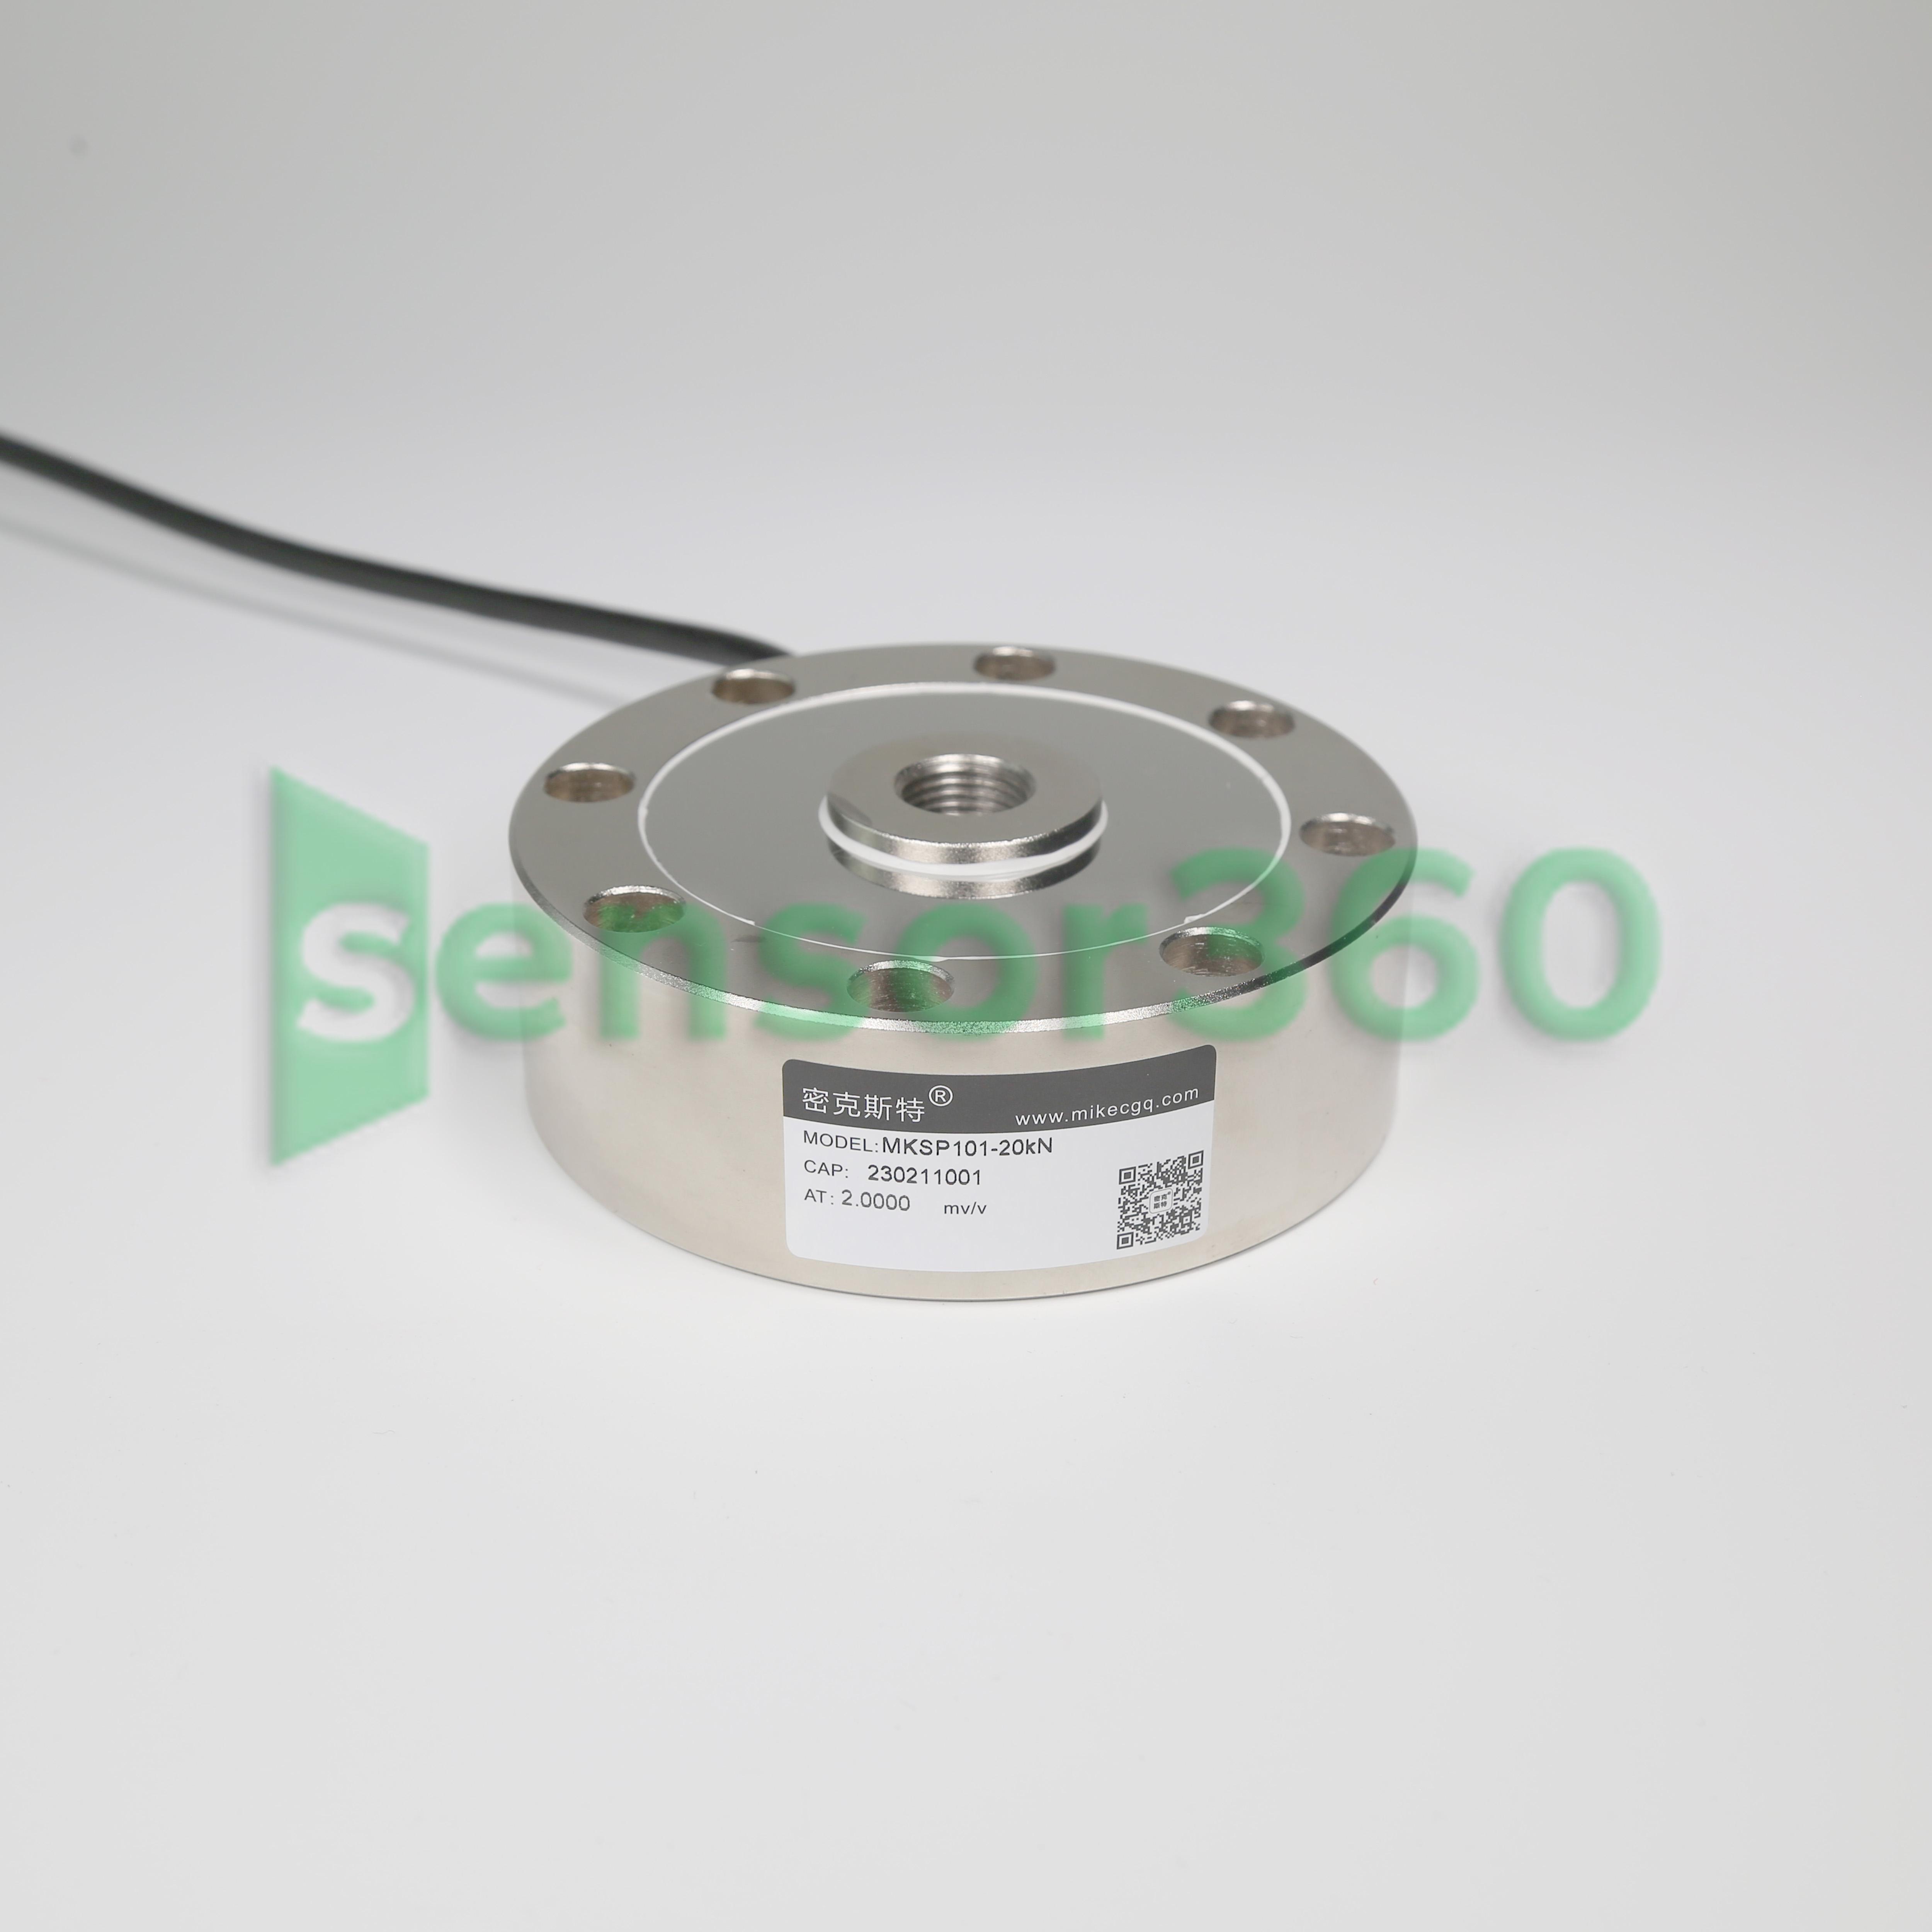 MKSP101-20kN spoke sensor